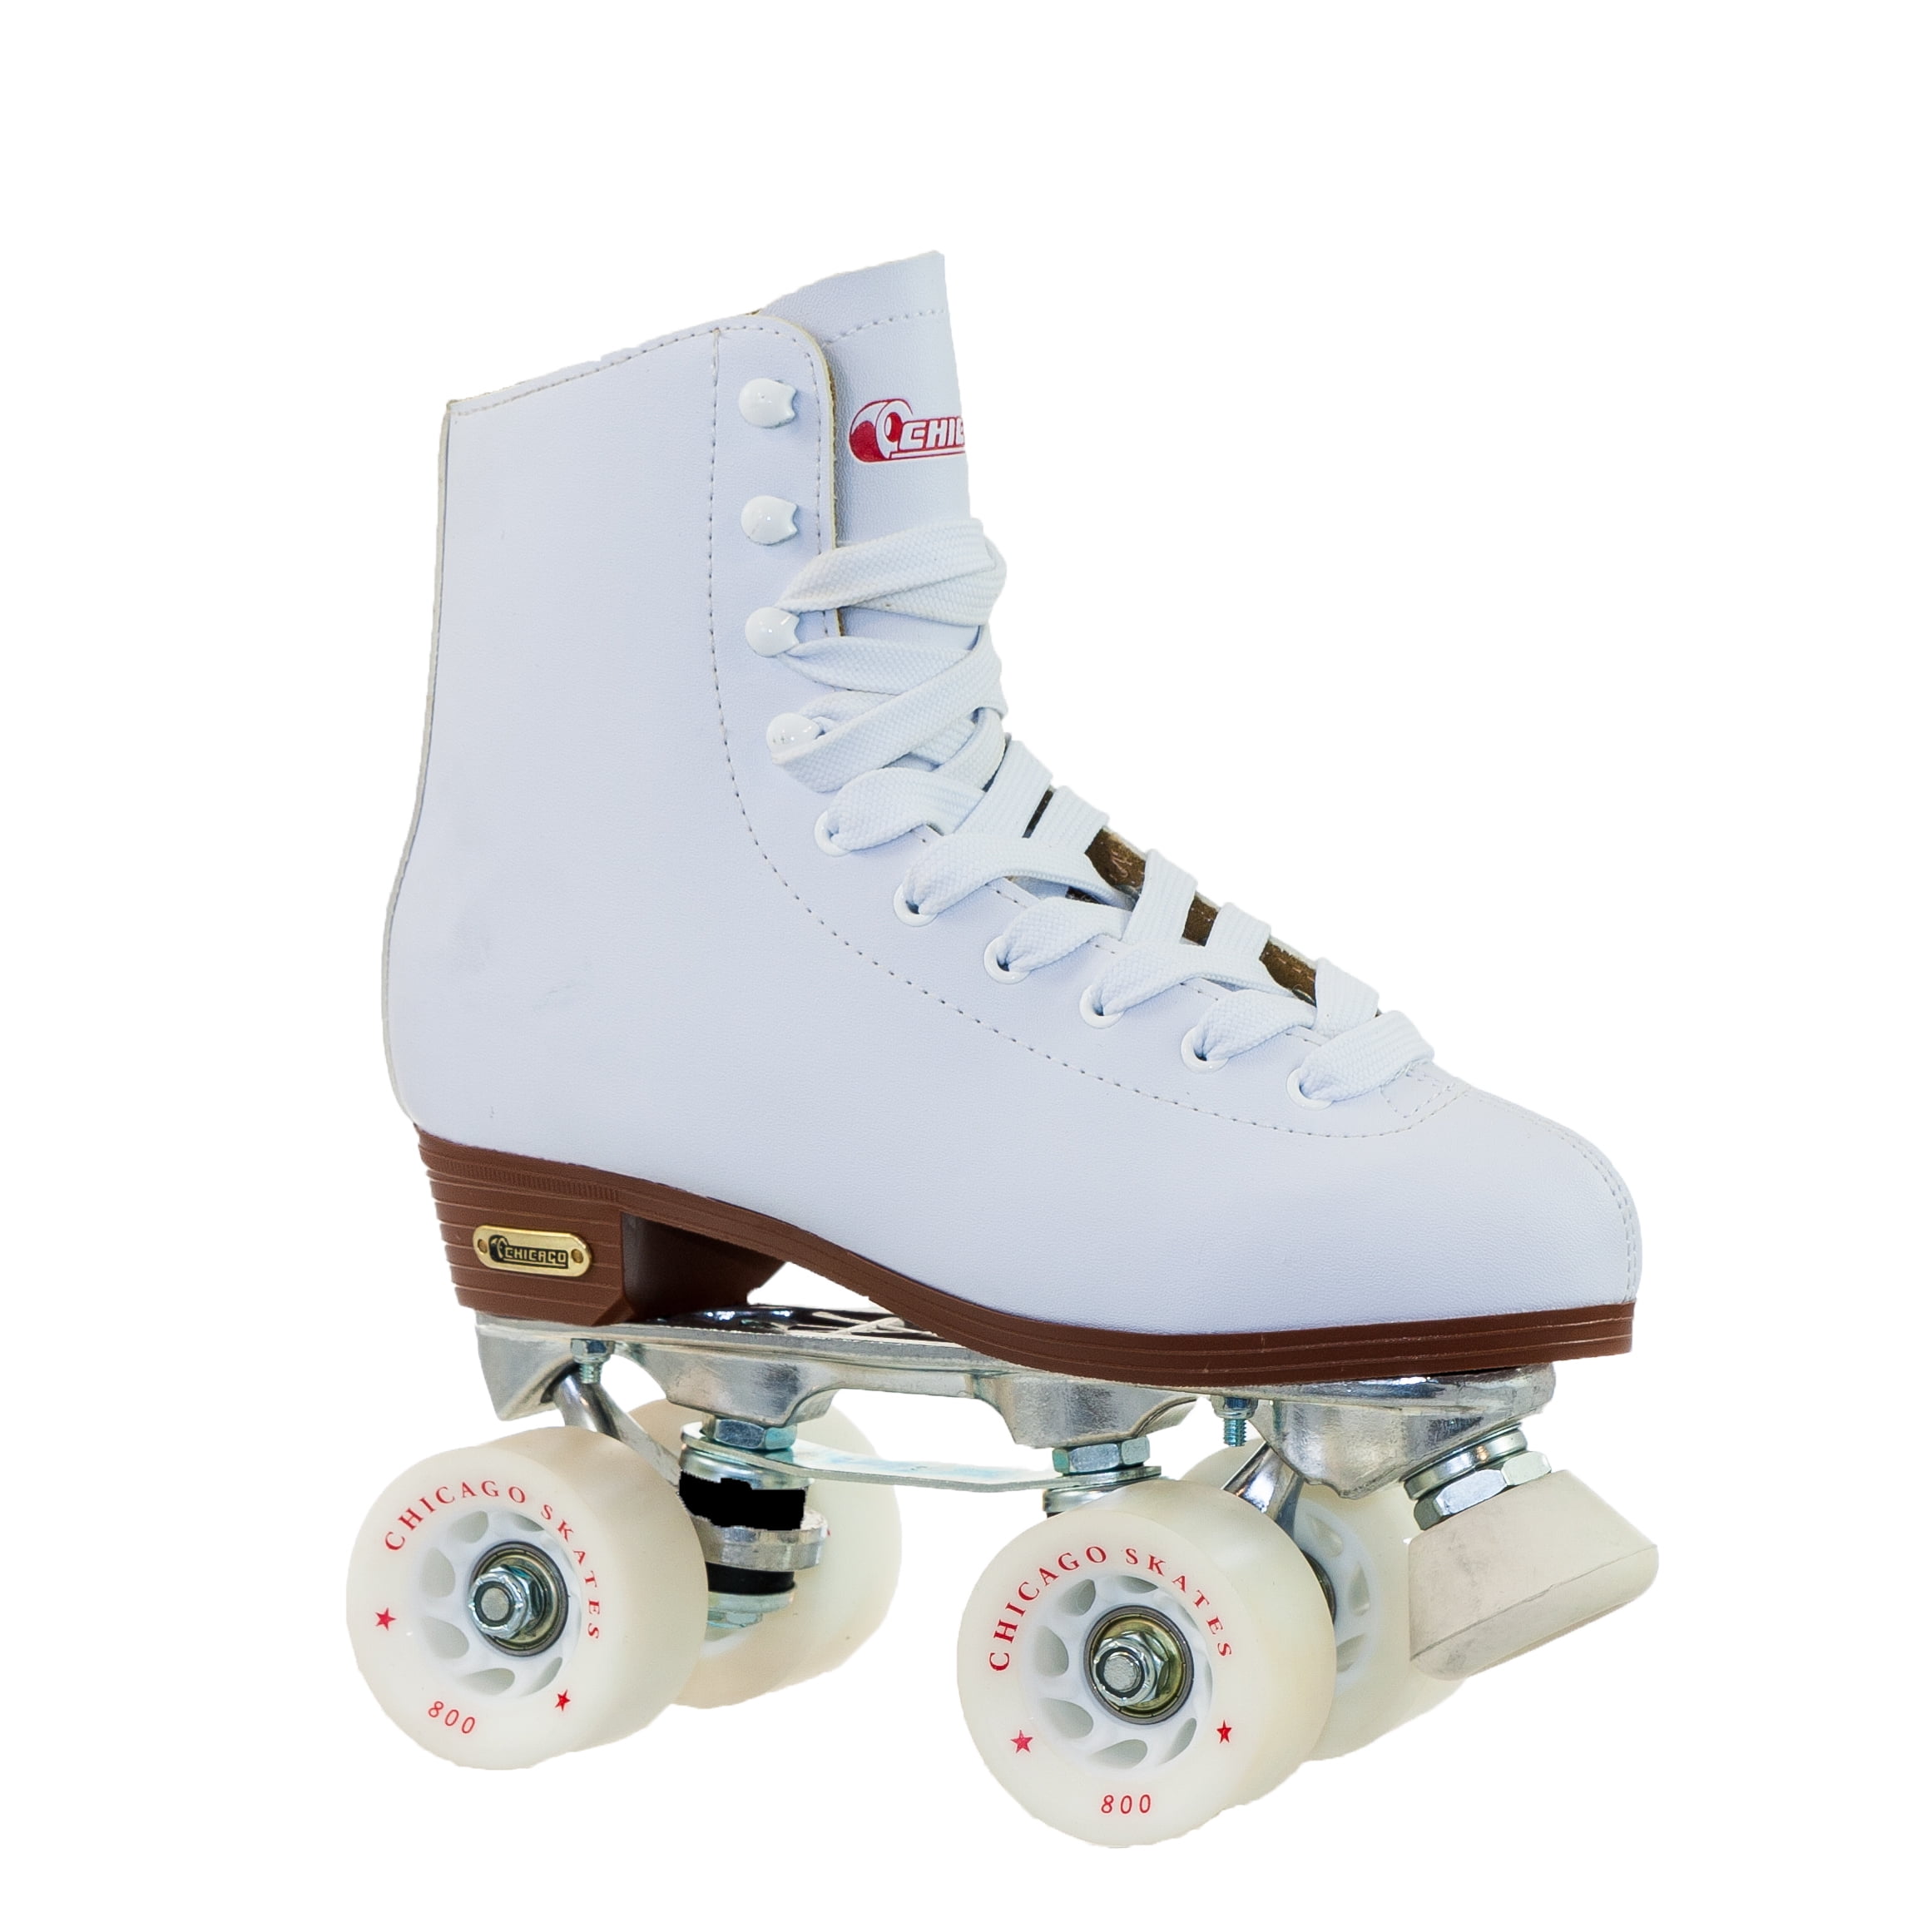 Epic Classic White and Pink Quad Roller Skates - Walmart.com